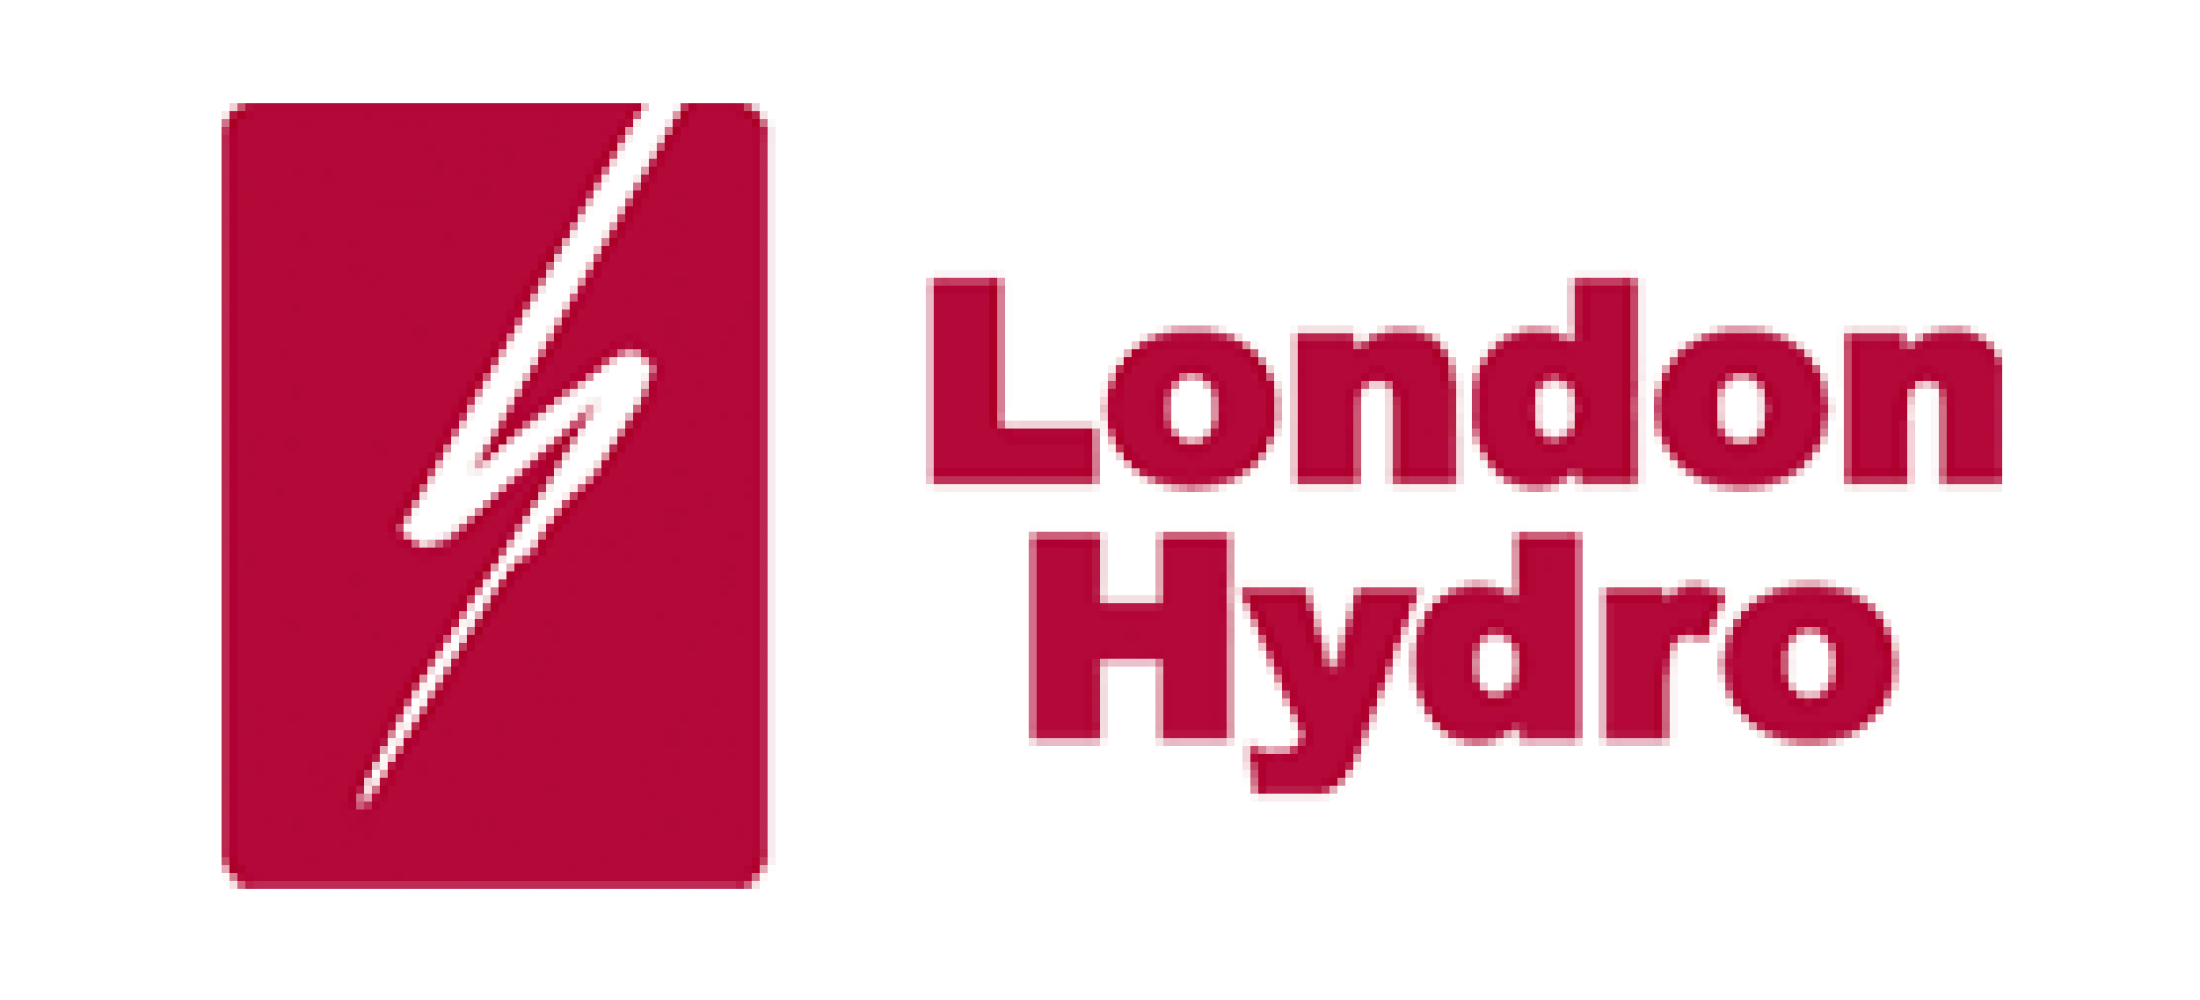 london-hydro-logo-power-workers-union